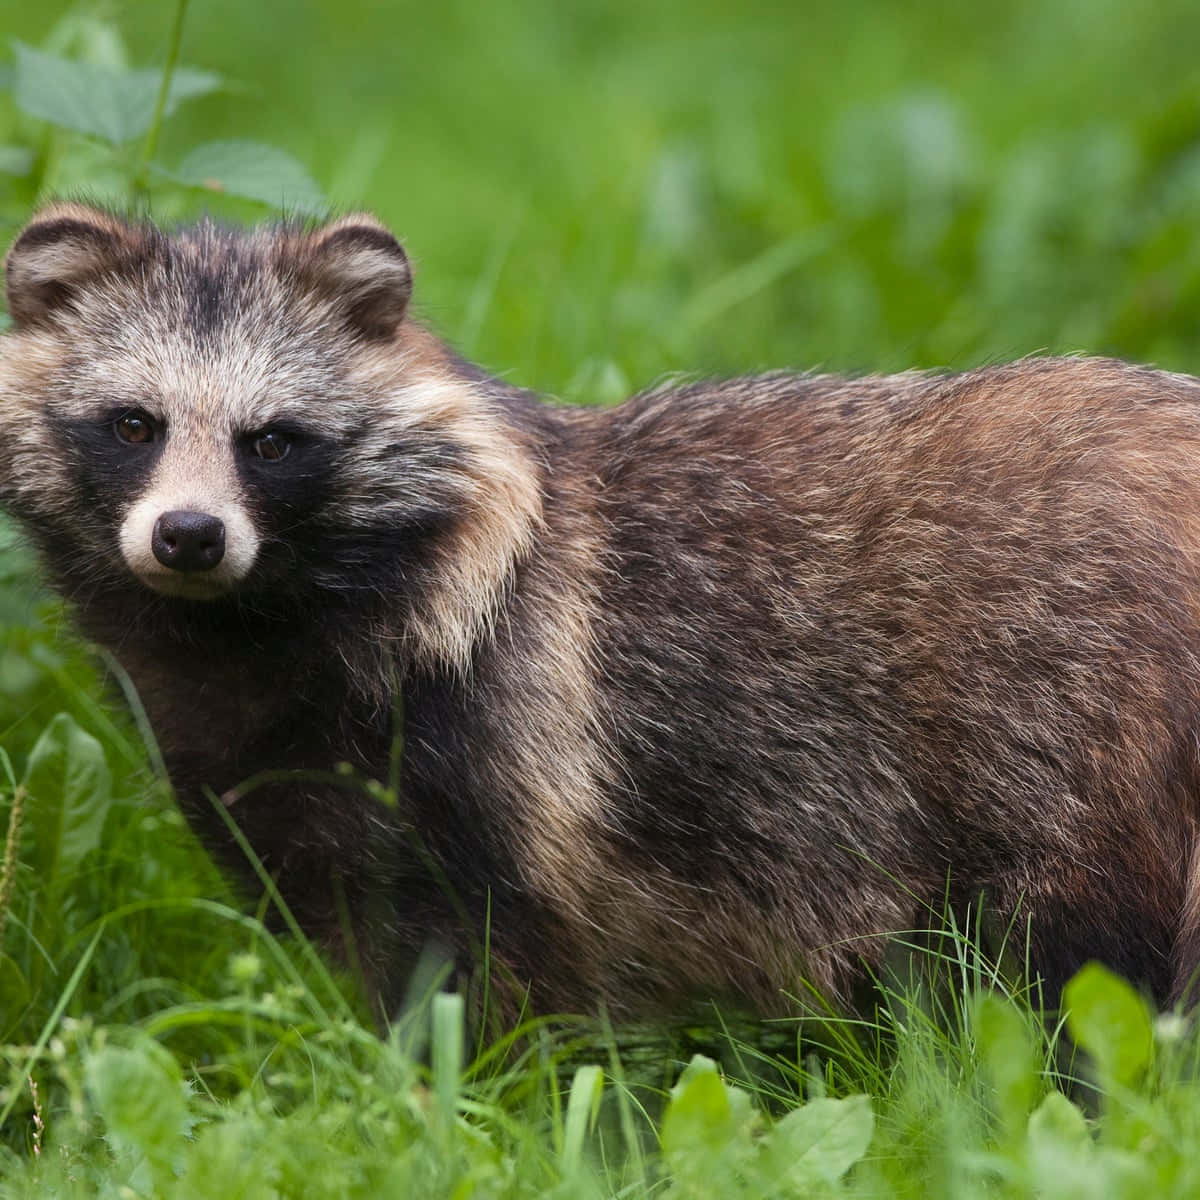 Fat Furry Cute Raccoon Picture